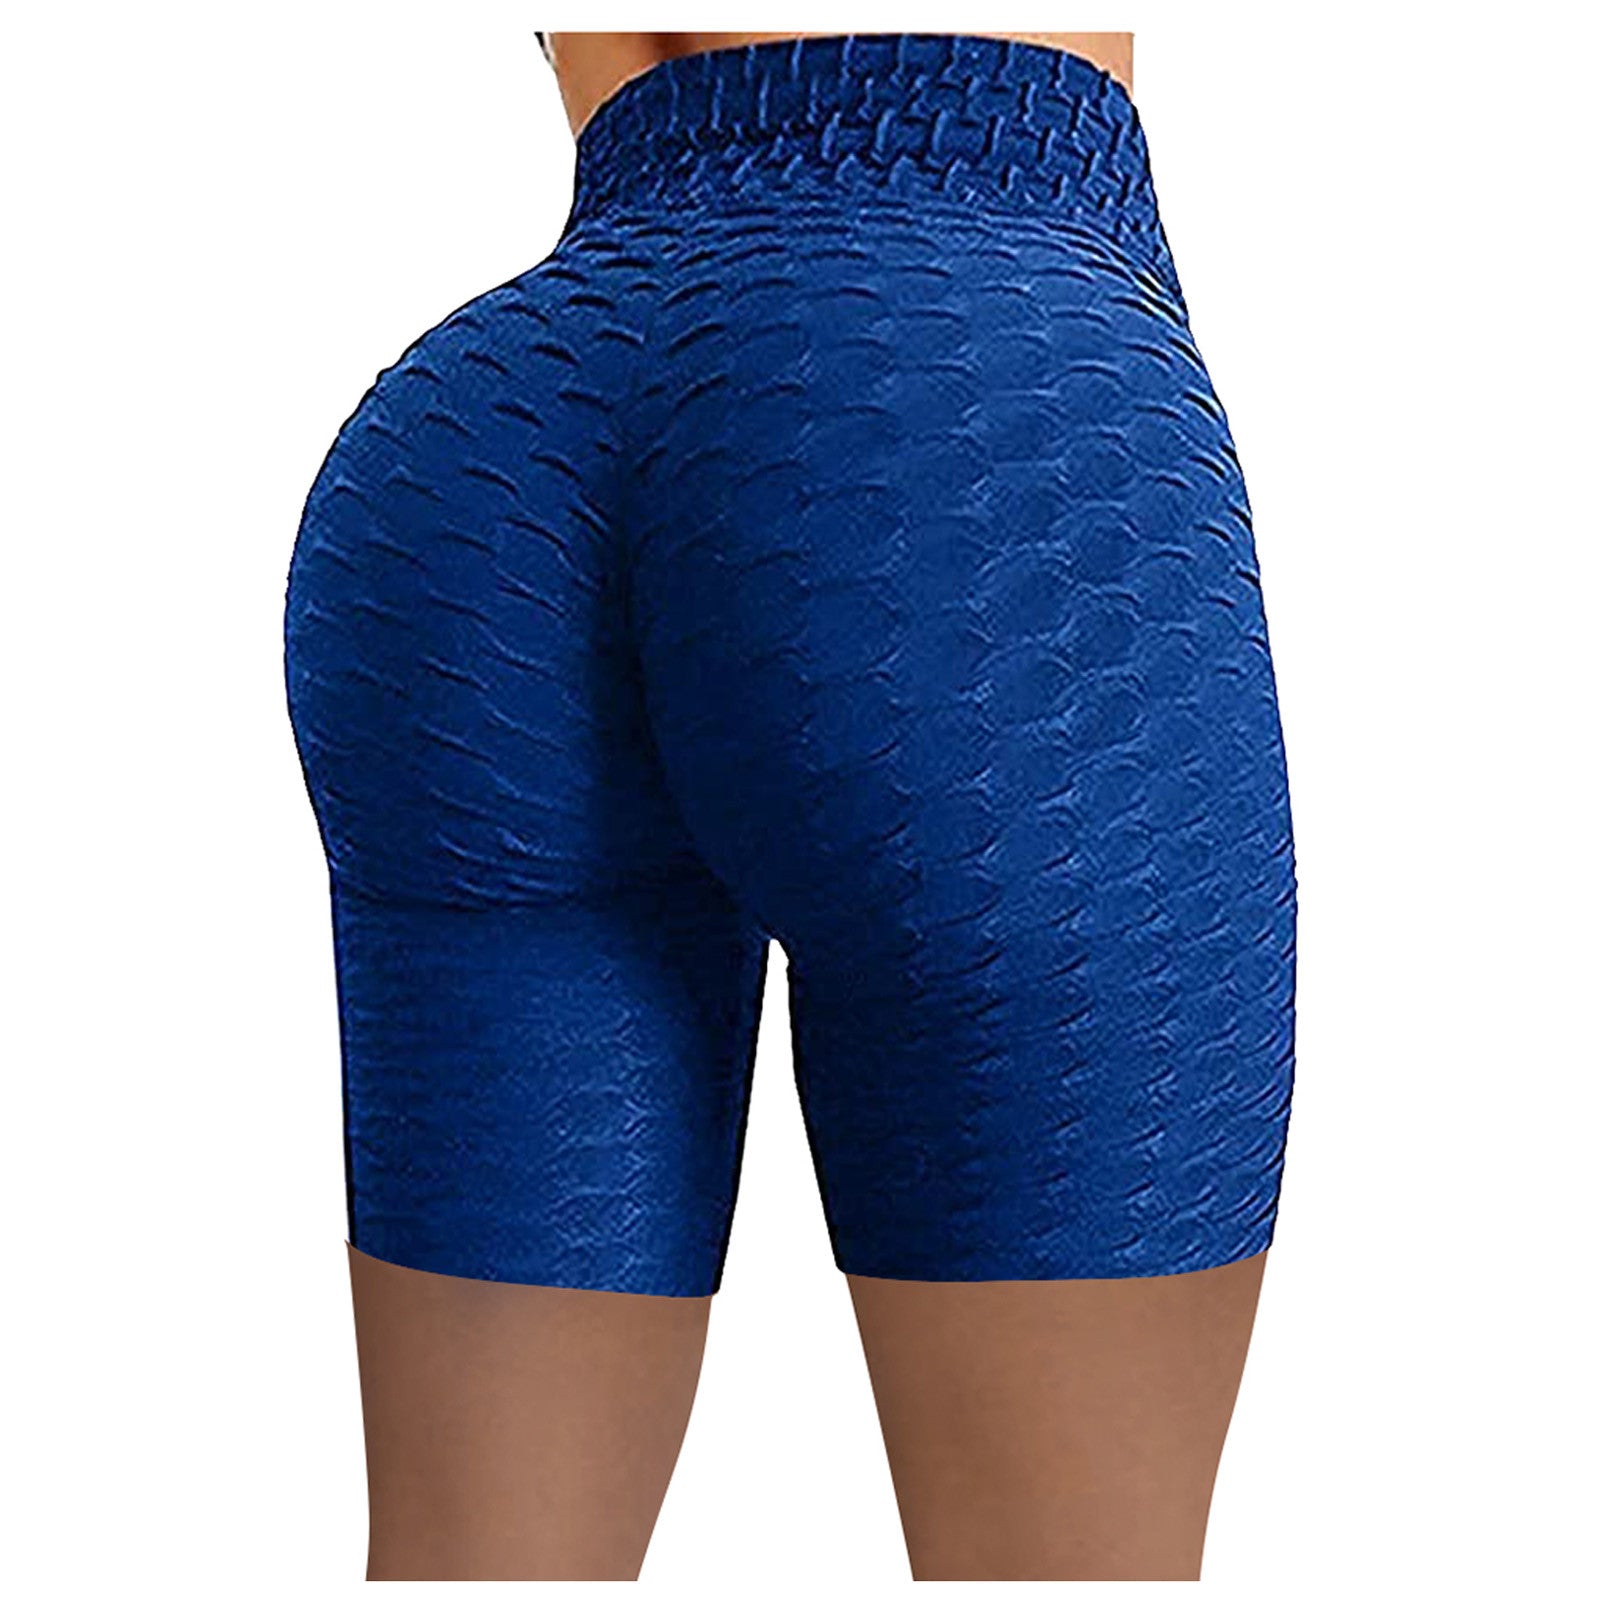 Honeycomb Legging Capri Shorts Back View Blue Color